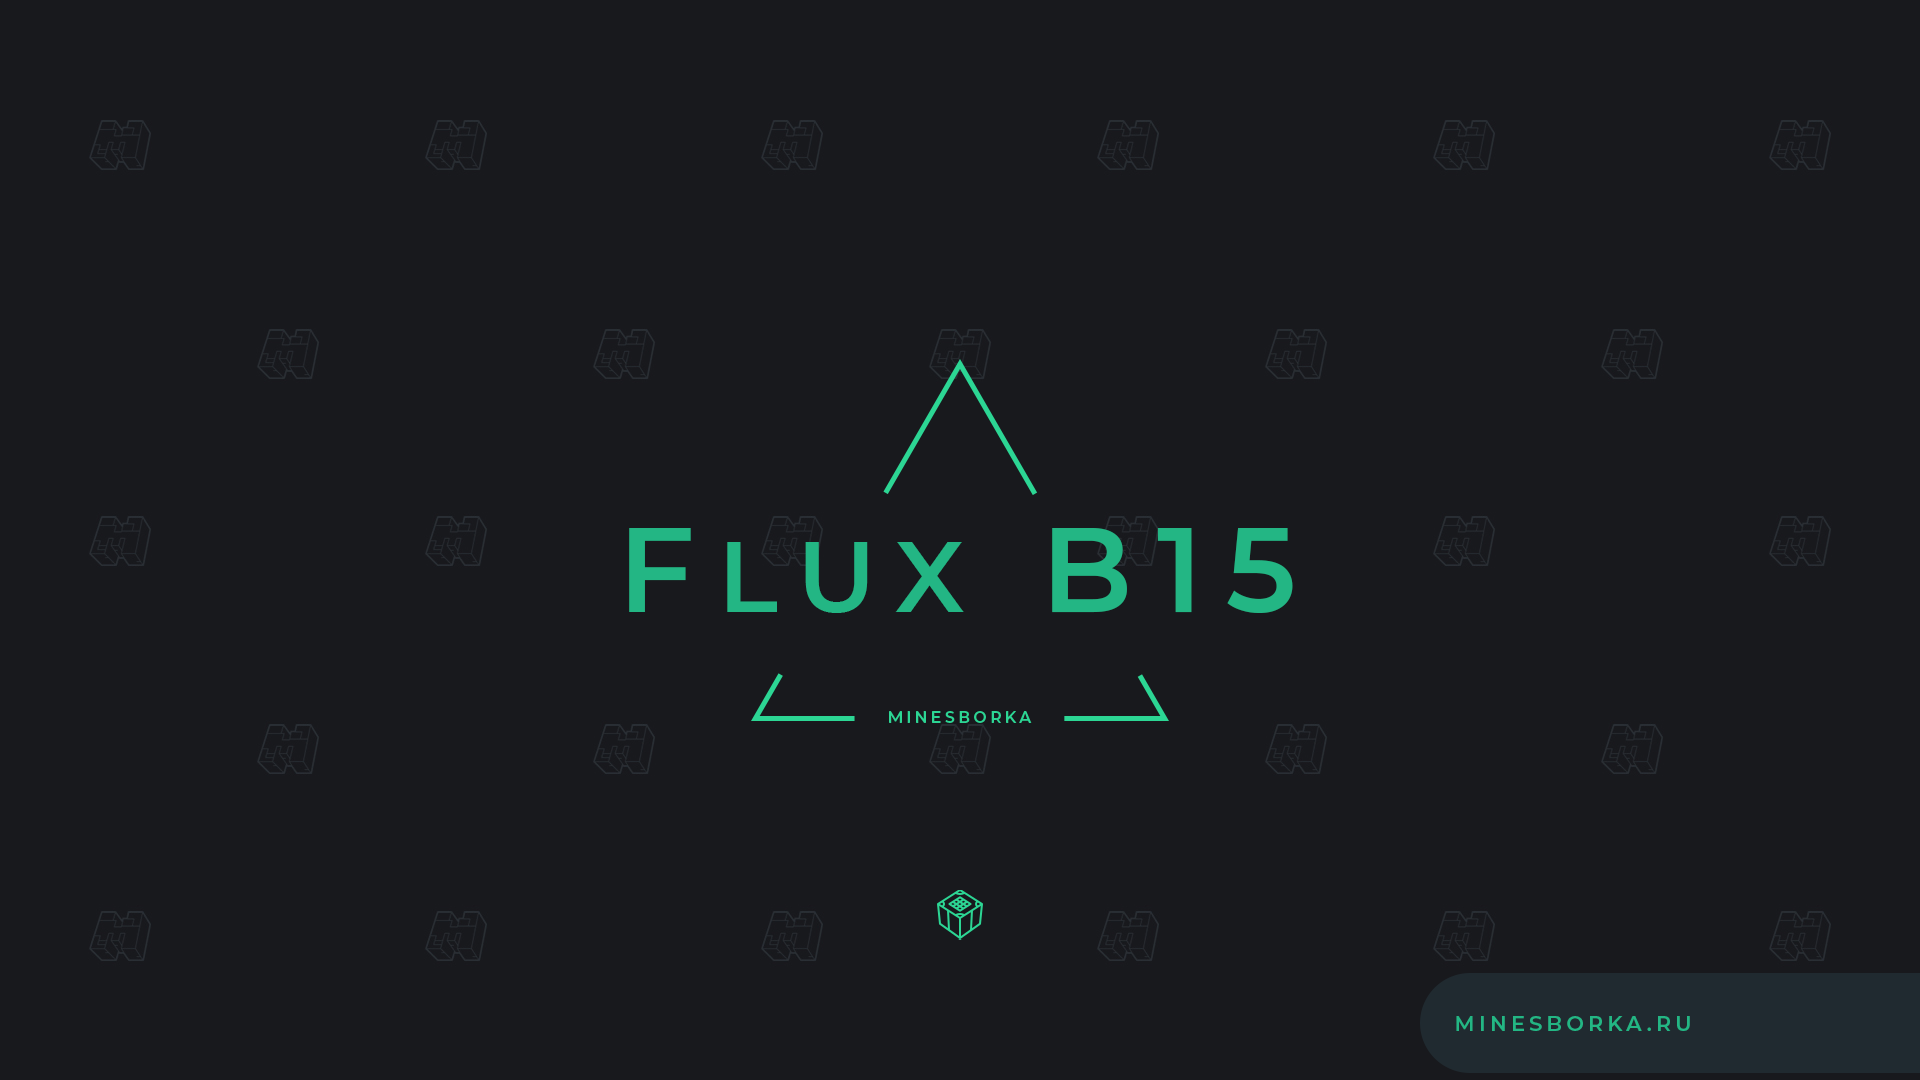 Flux-b15 | Хороший чит для Minecraft | KillAura, Fly, AntiKnowBack